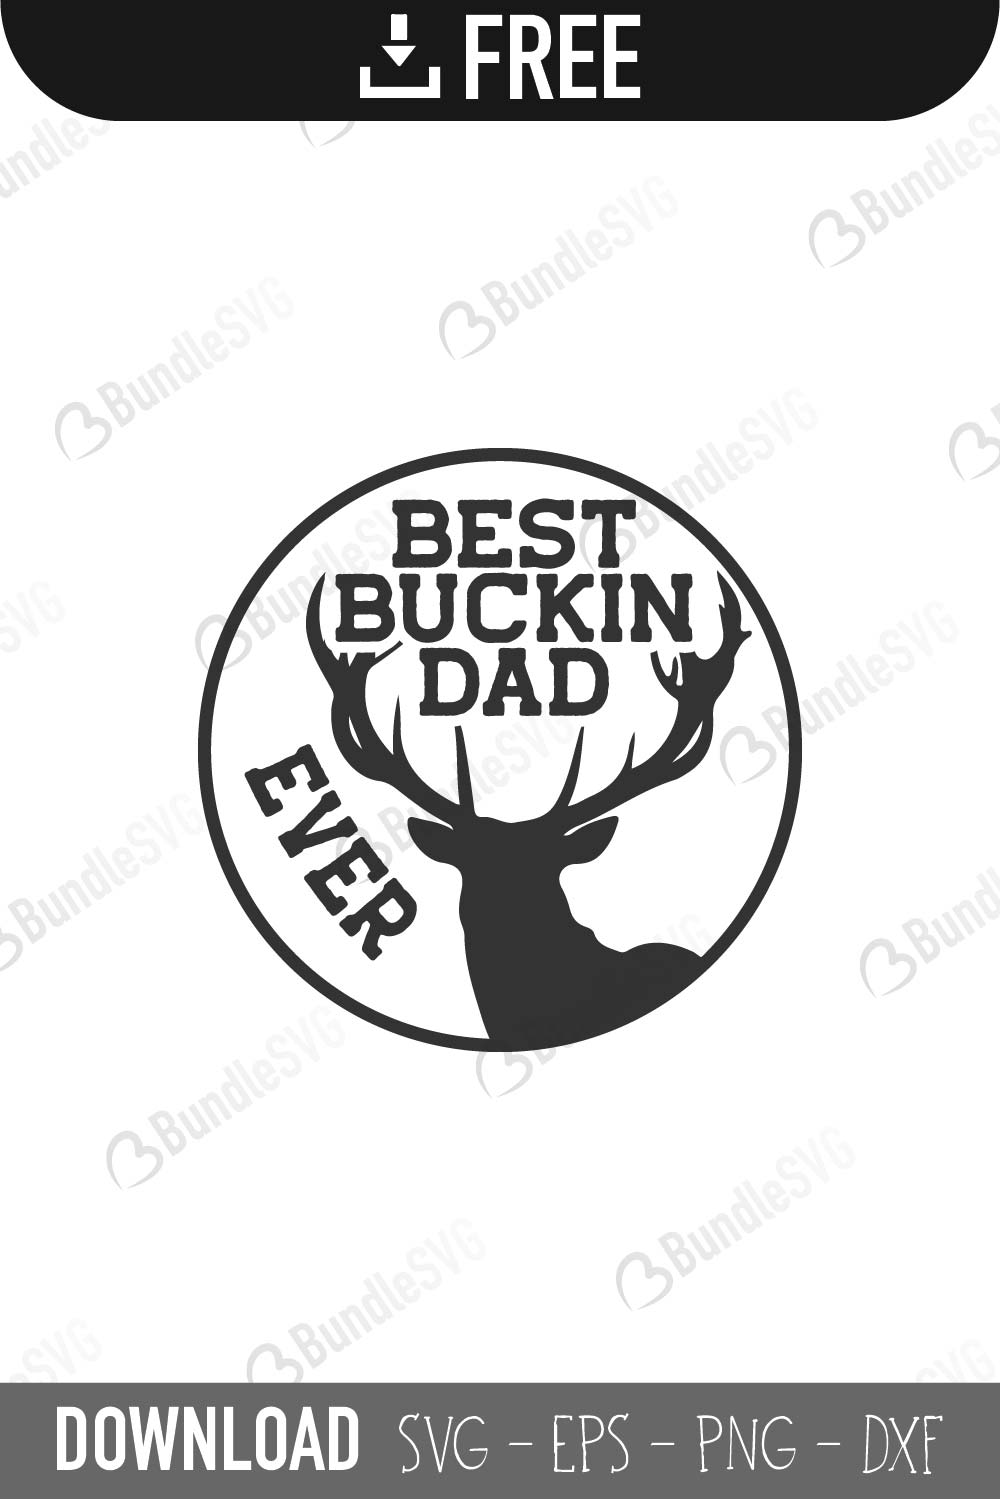 Download Best Buckin Dad Ever Svg Cut Files Free Download Bundlesvg